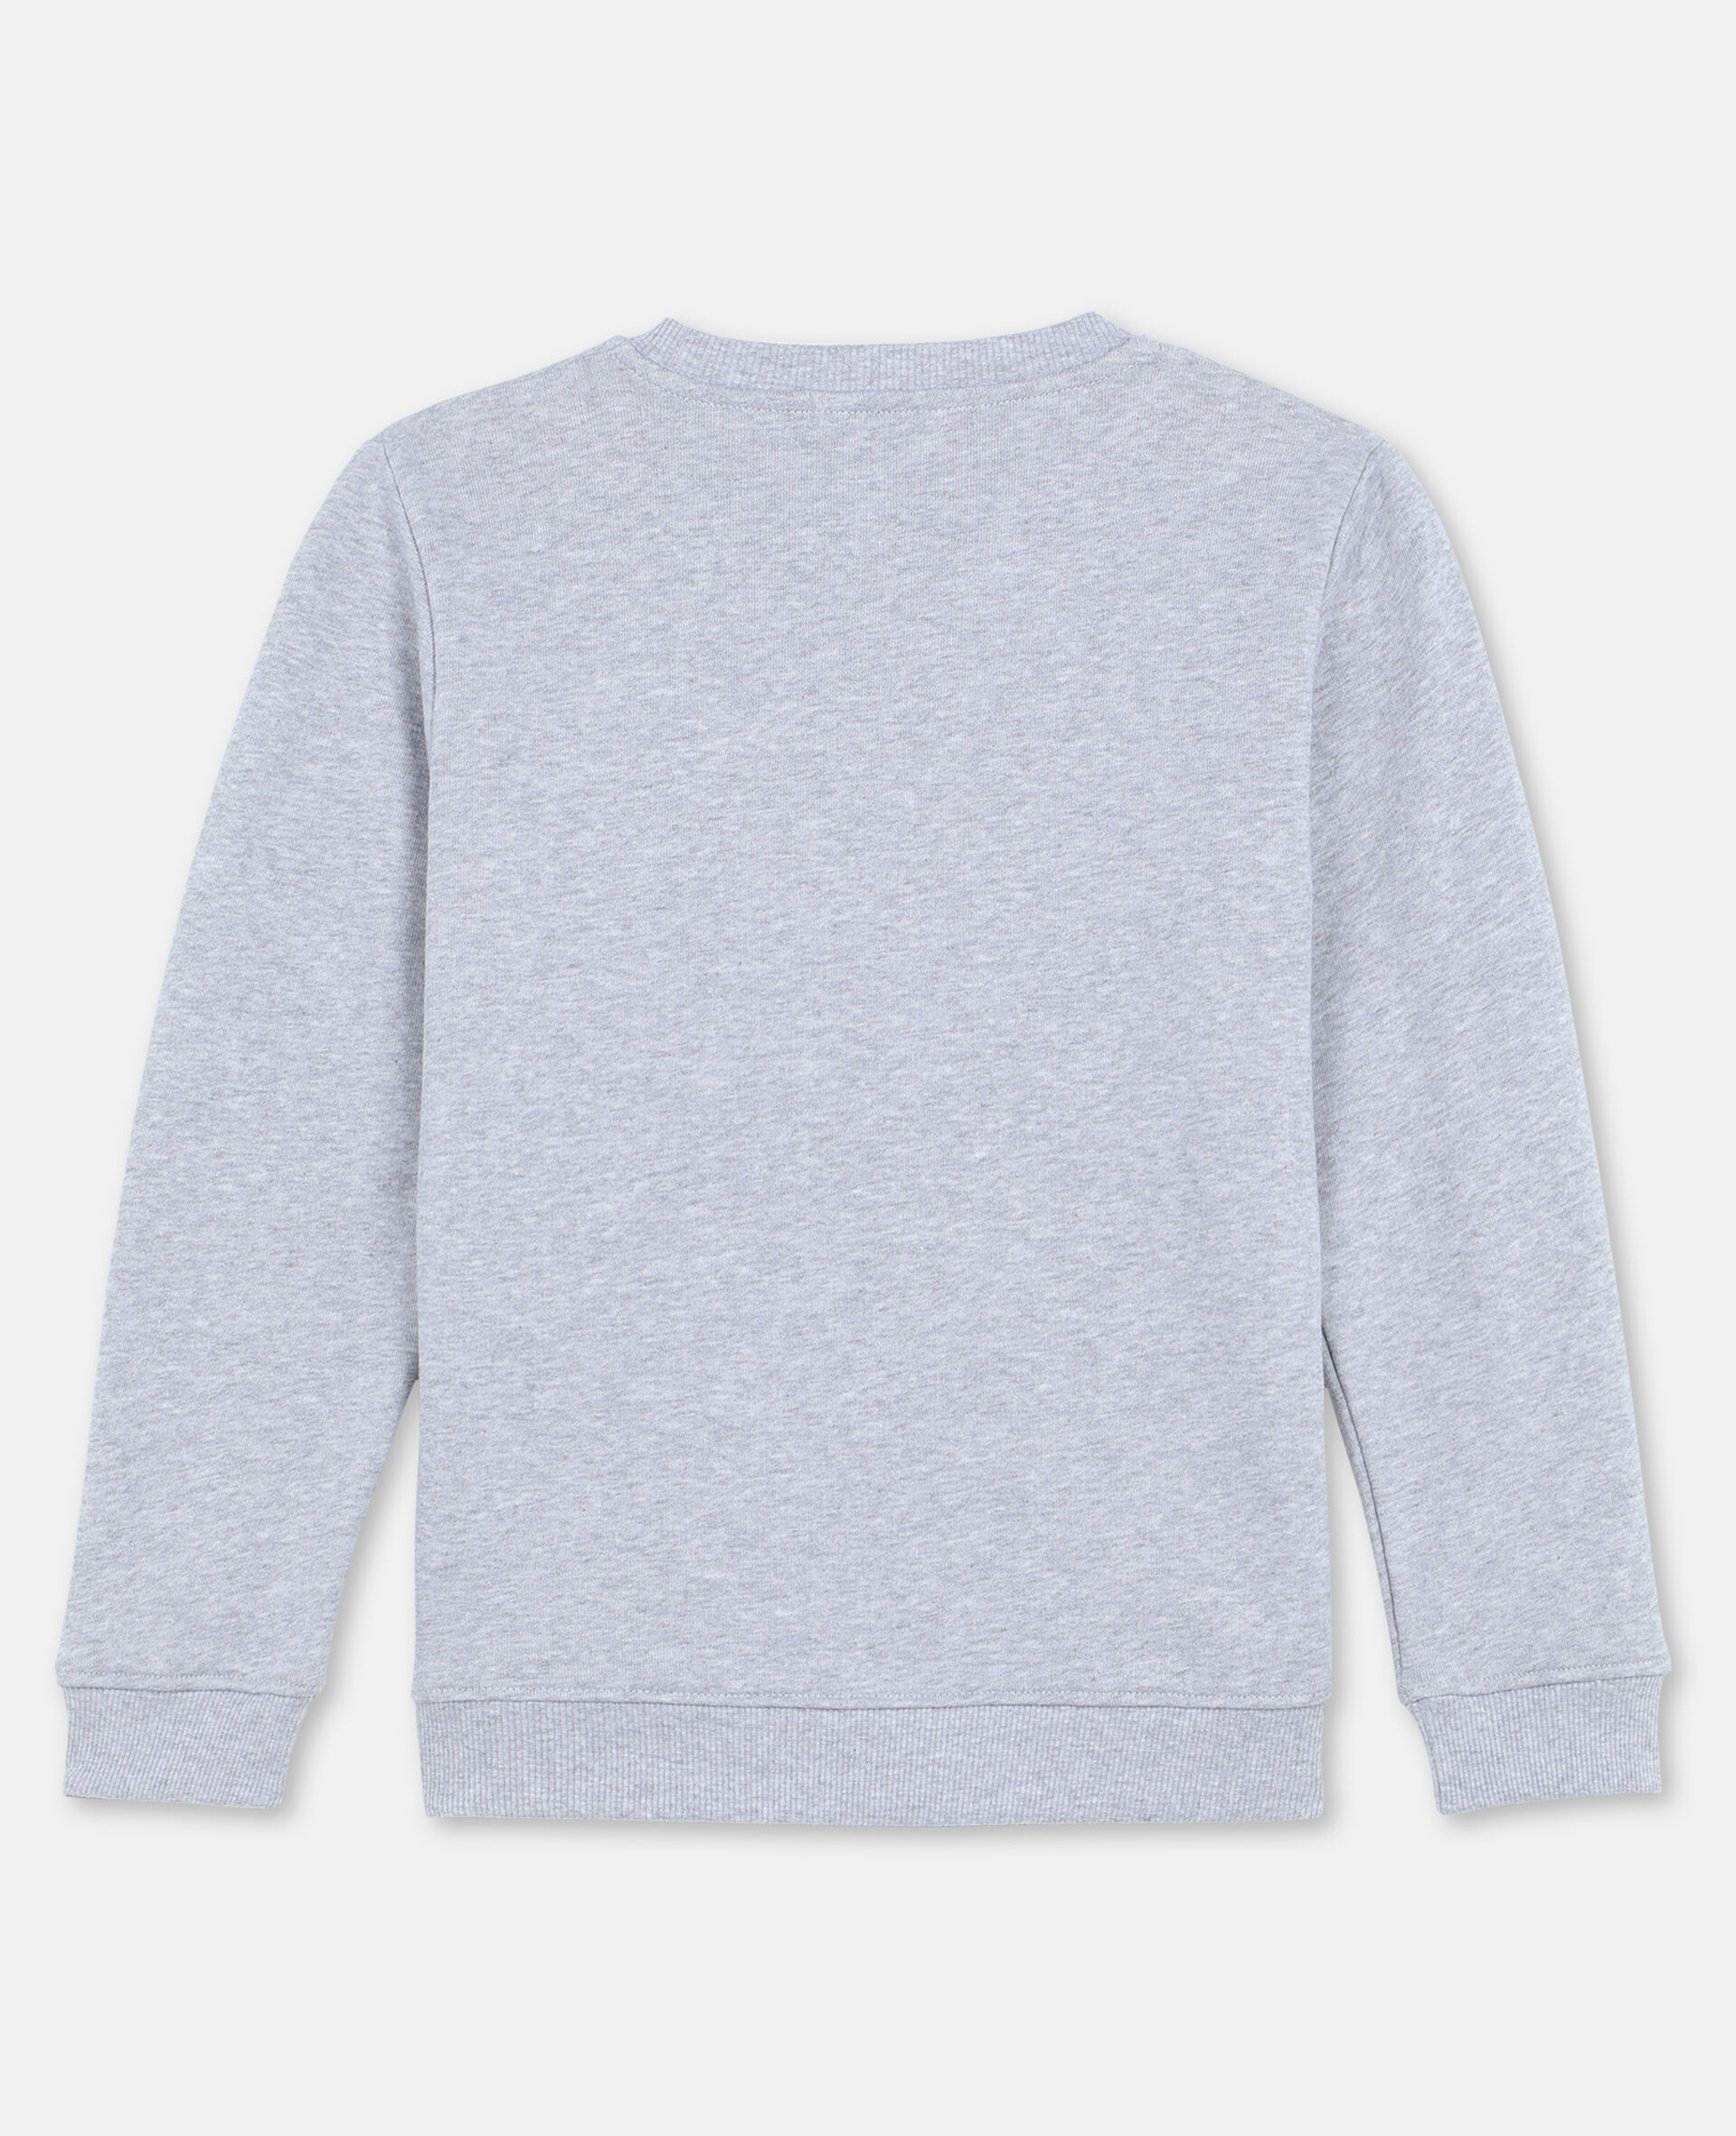 Roarrr Cotton Sweatshirt -Grey-large image number 3